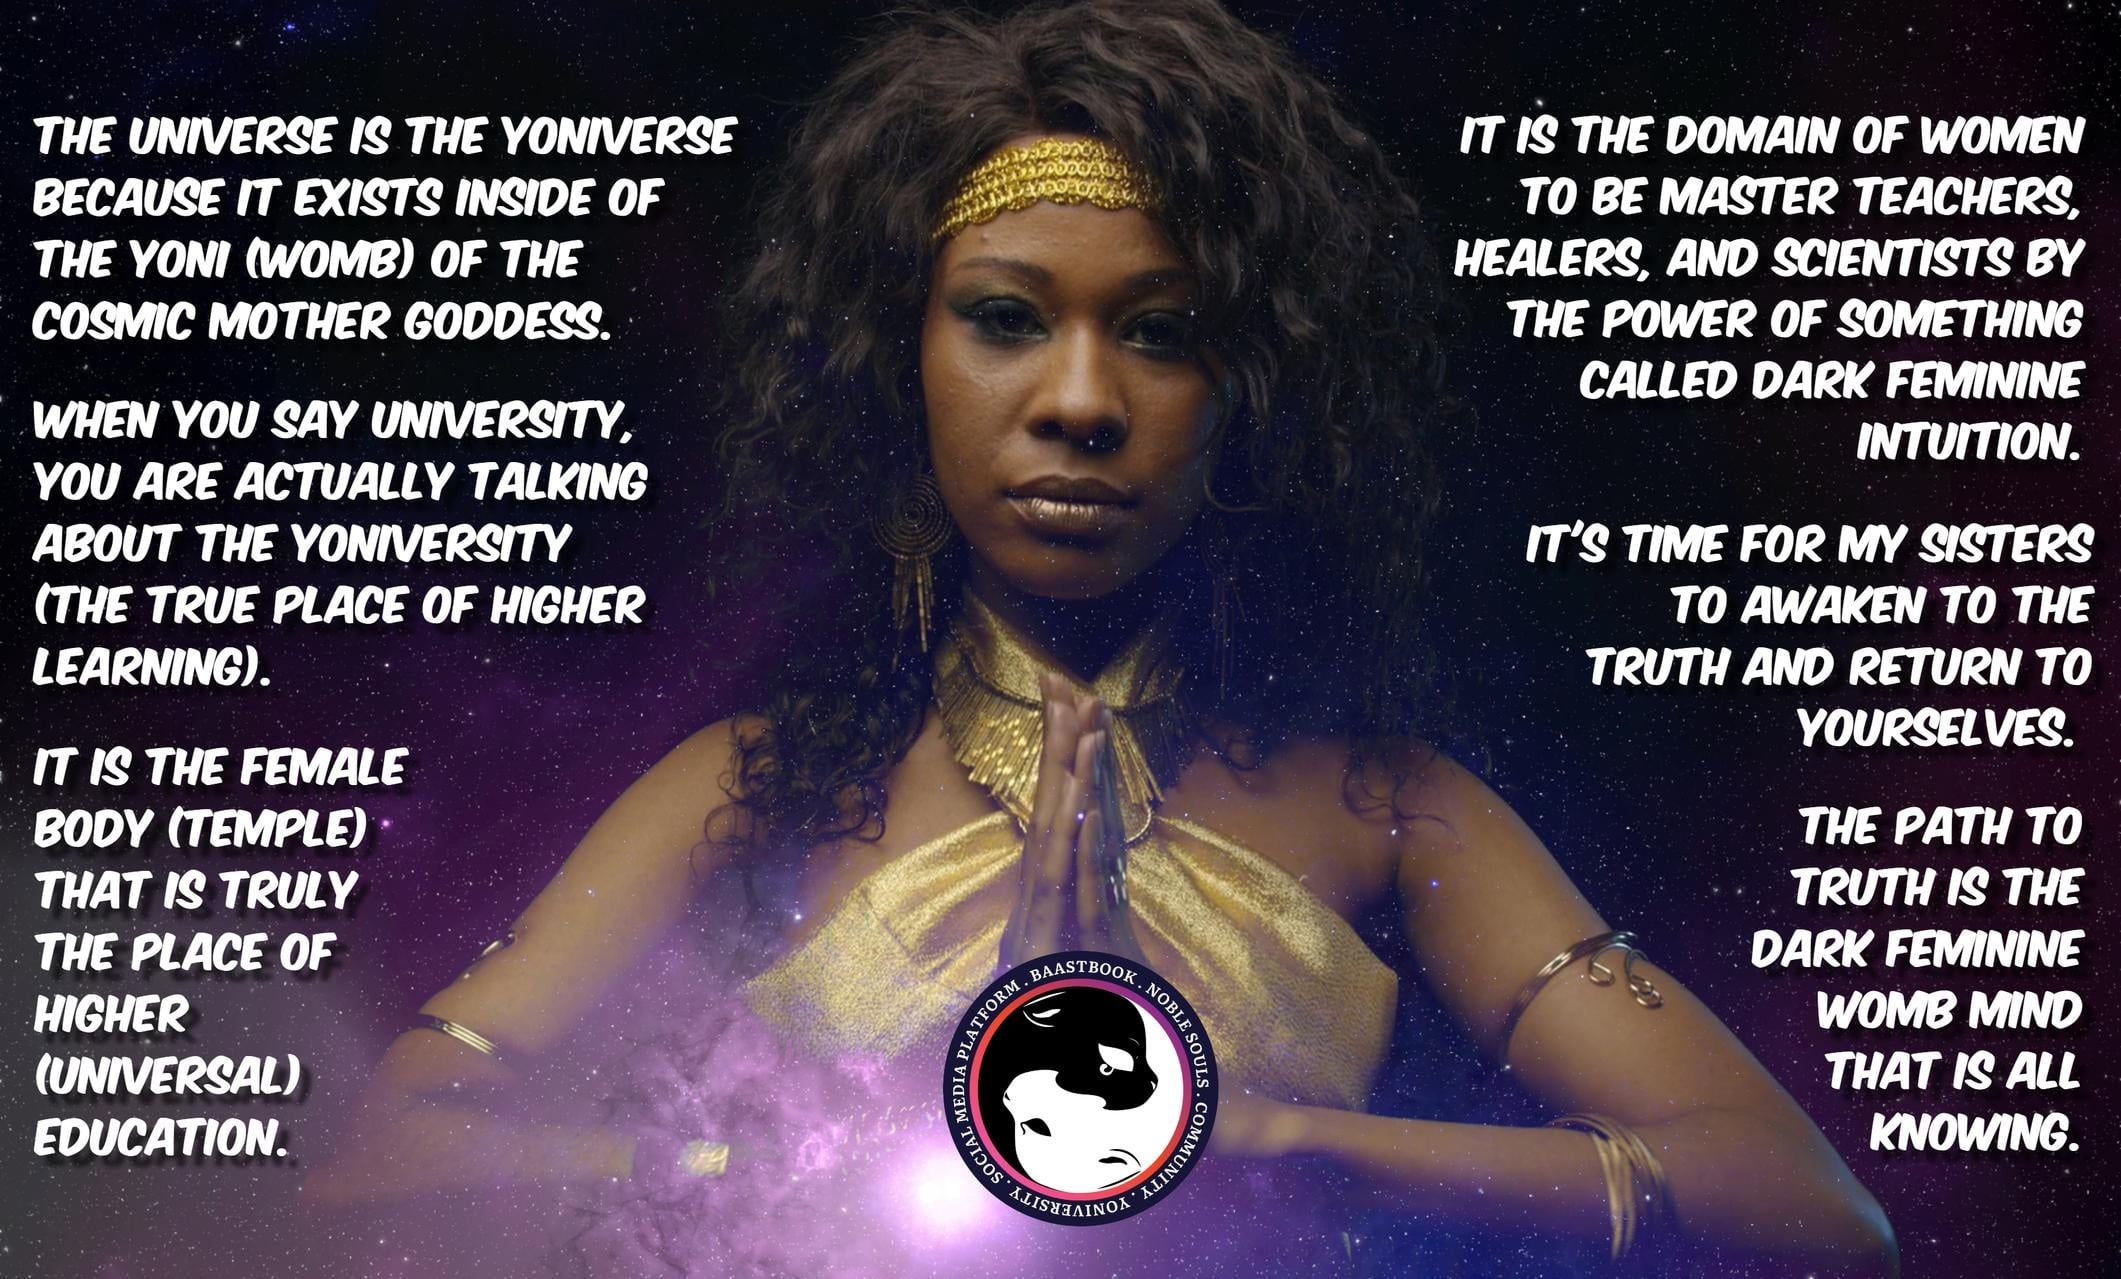 Black Woman Goddess Higher Education University Yoniversity Place Goddess Stars Cosmic Dark Feminine 06 Collage 1